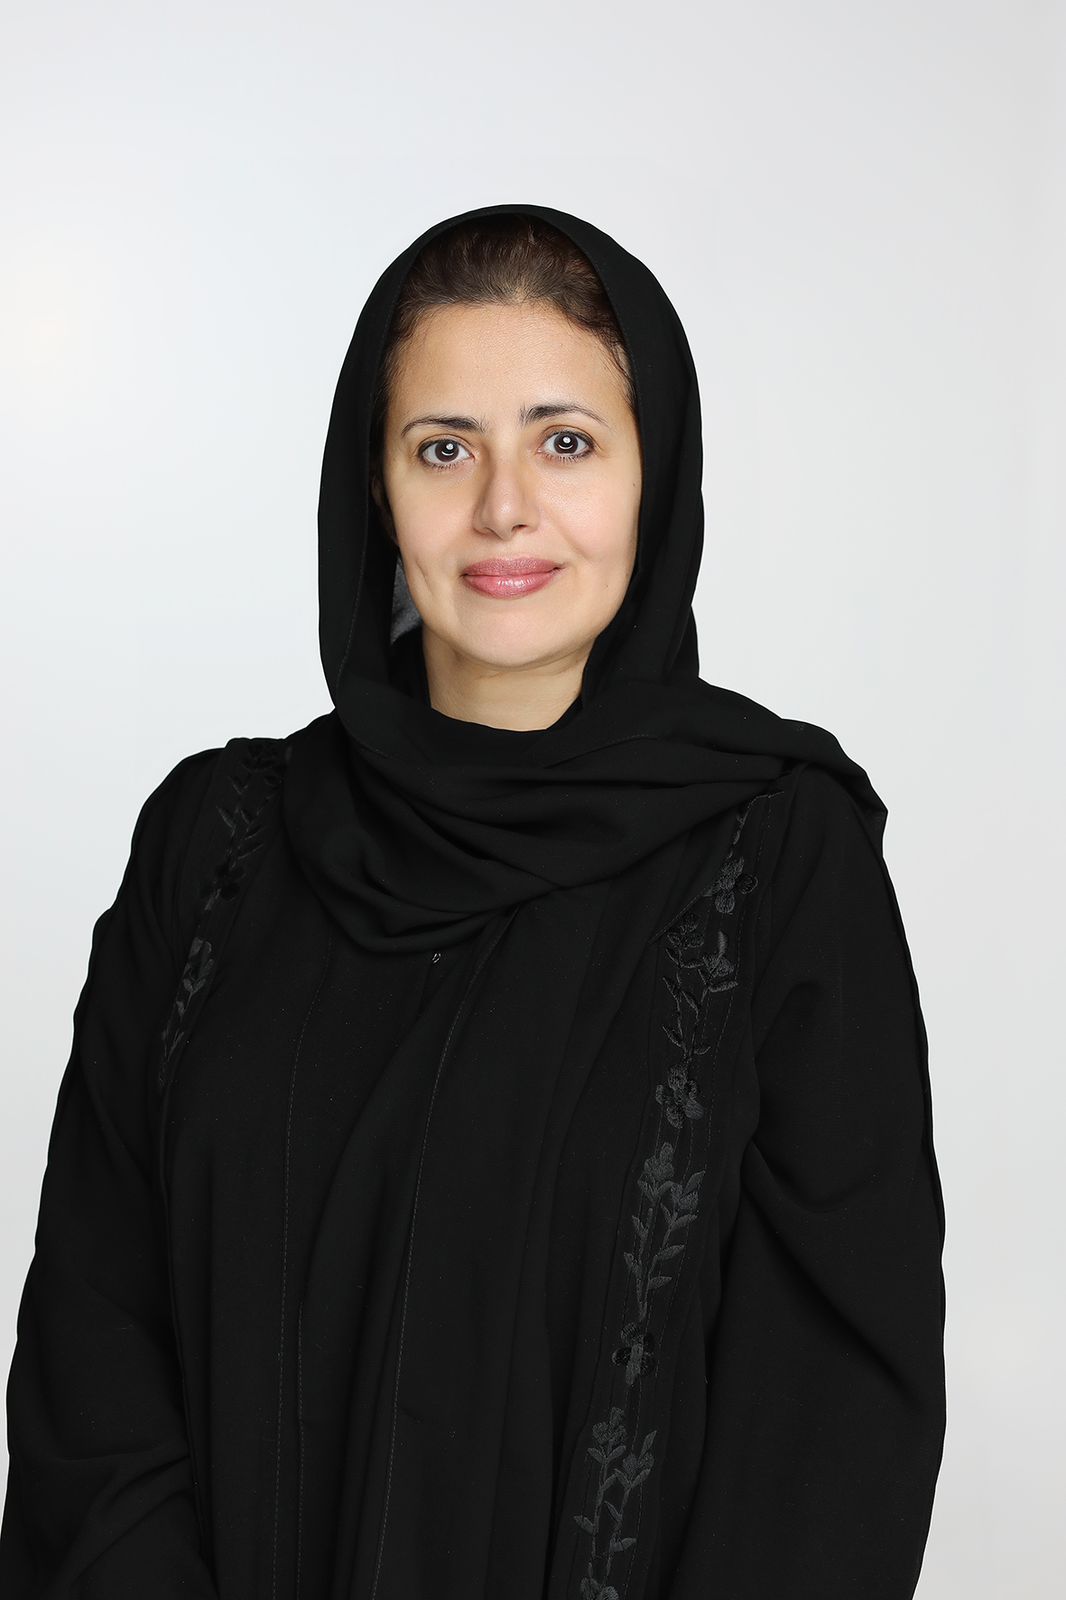 Ms. Fadwa AlBawardi